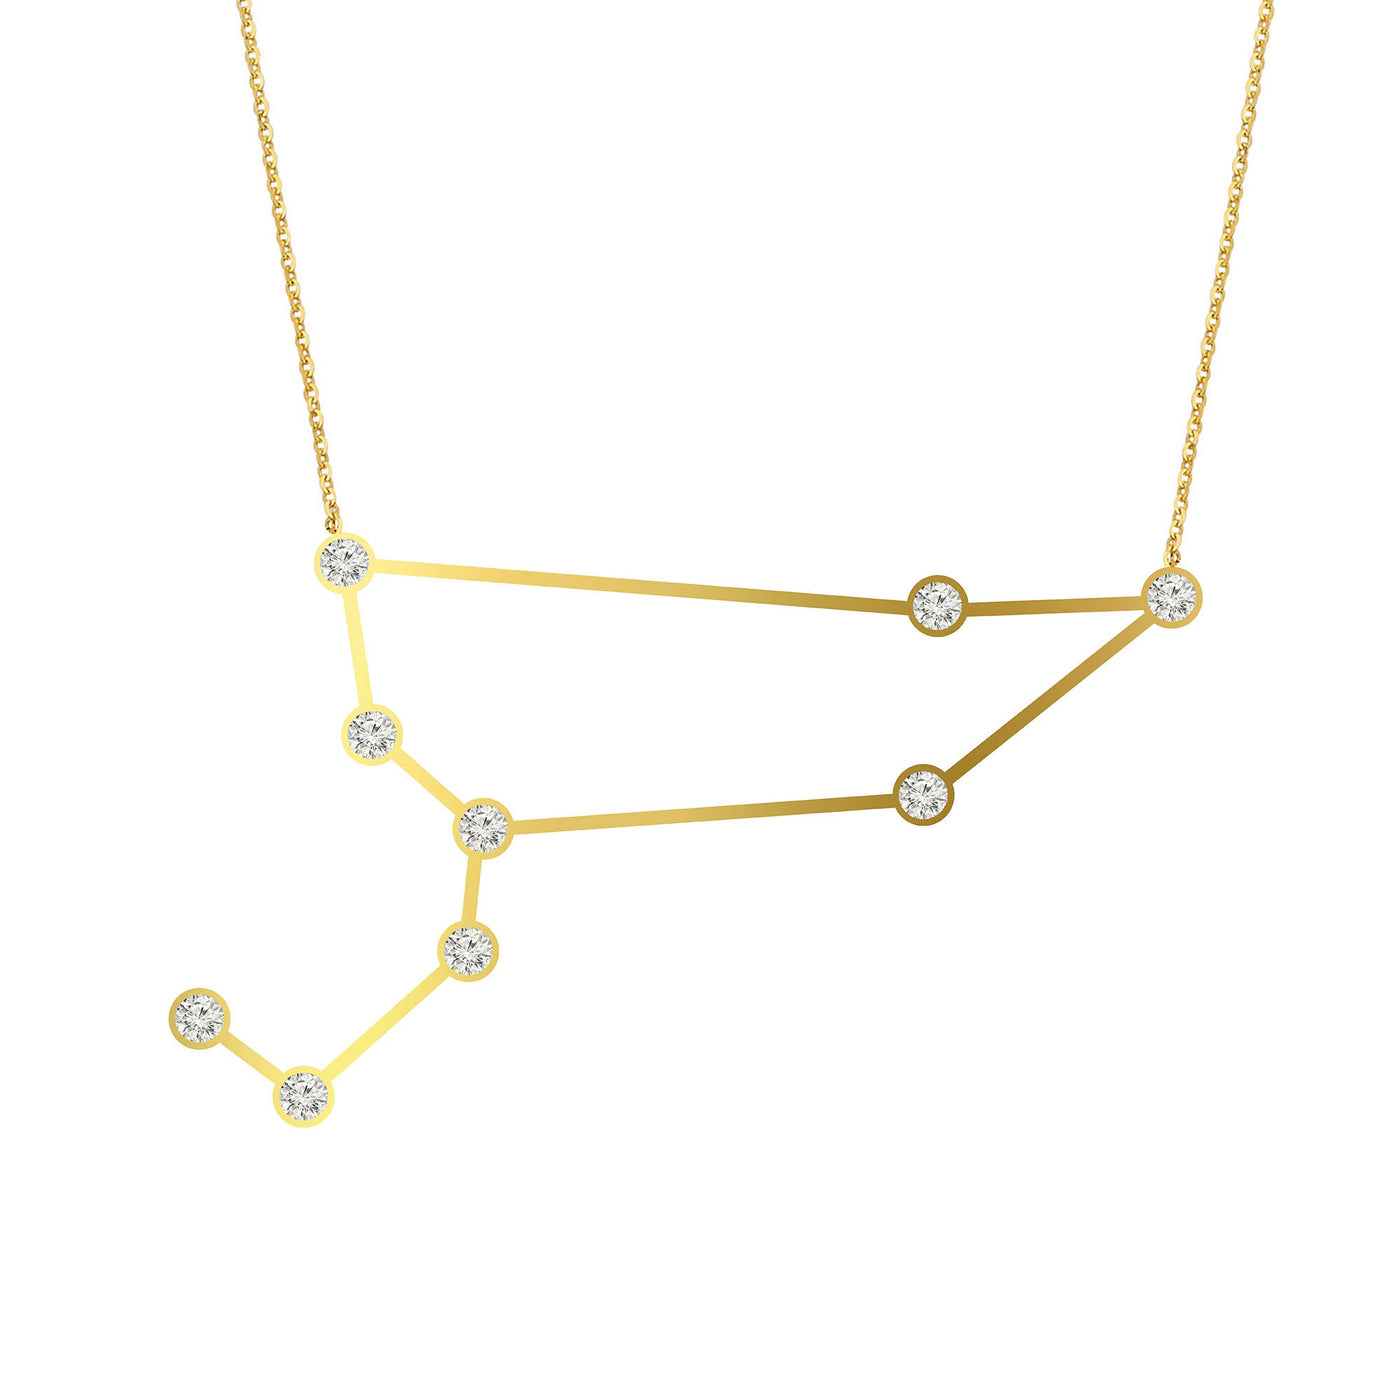 Leo Zodiac Constellation Necklace